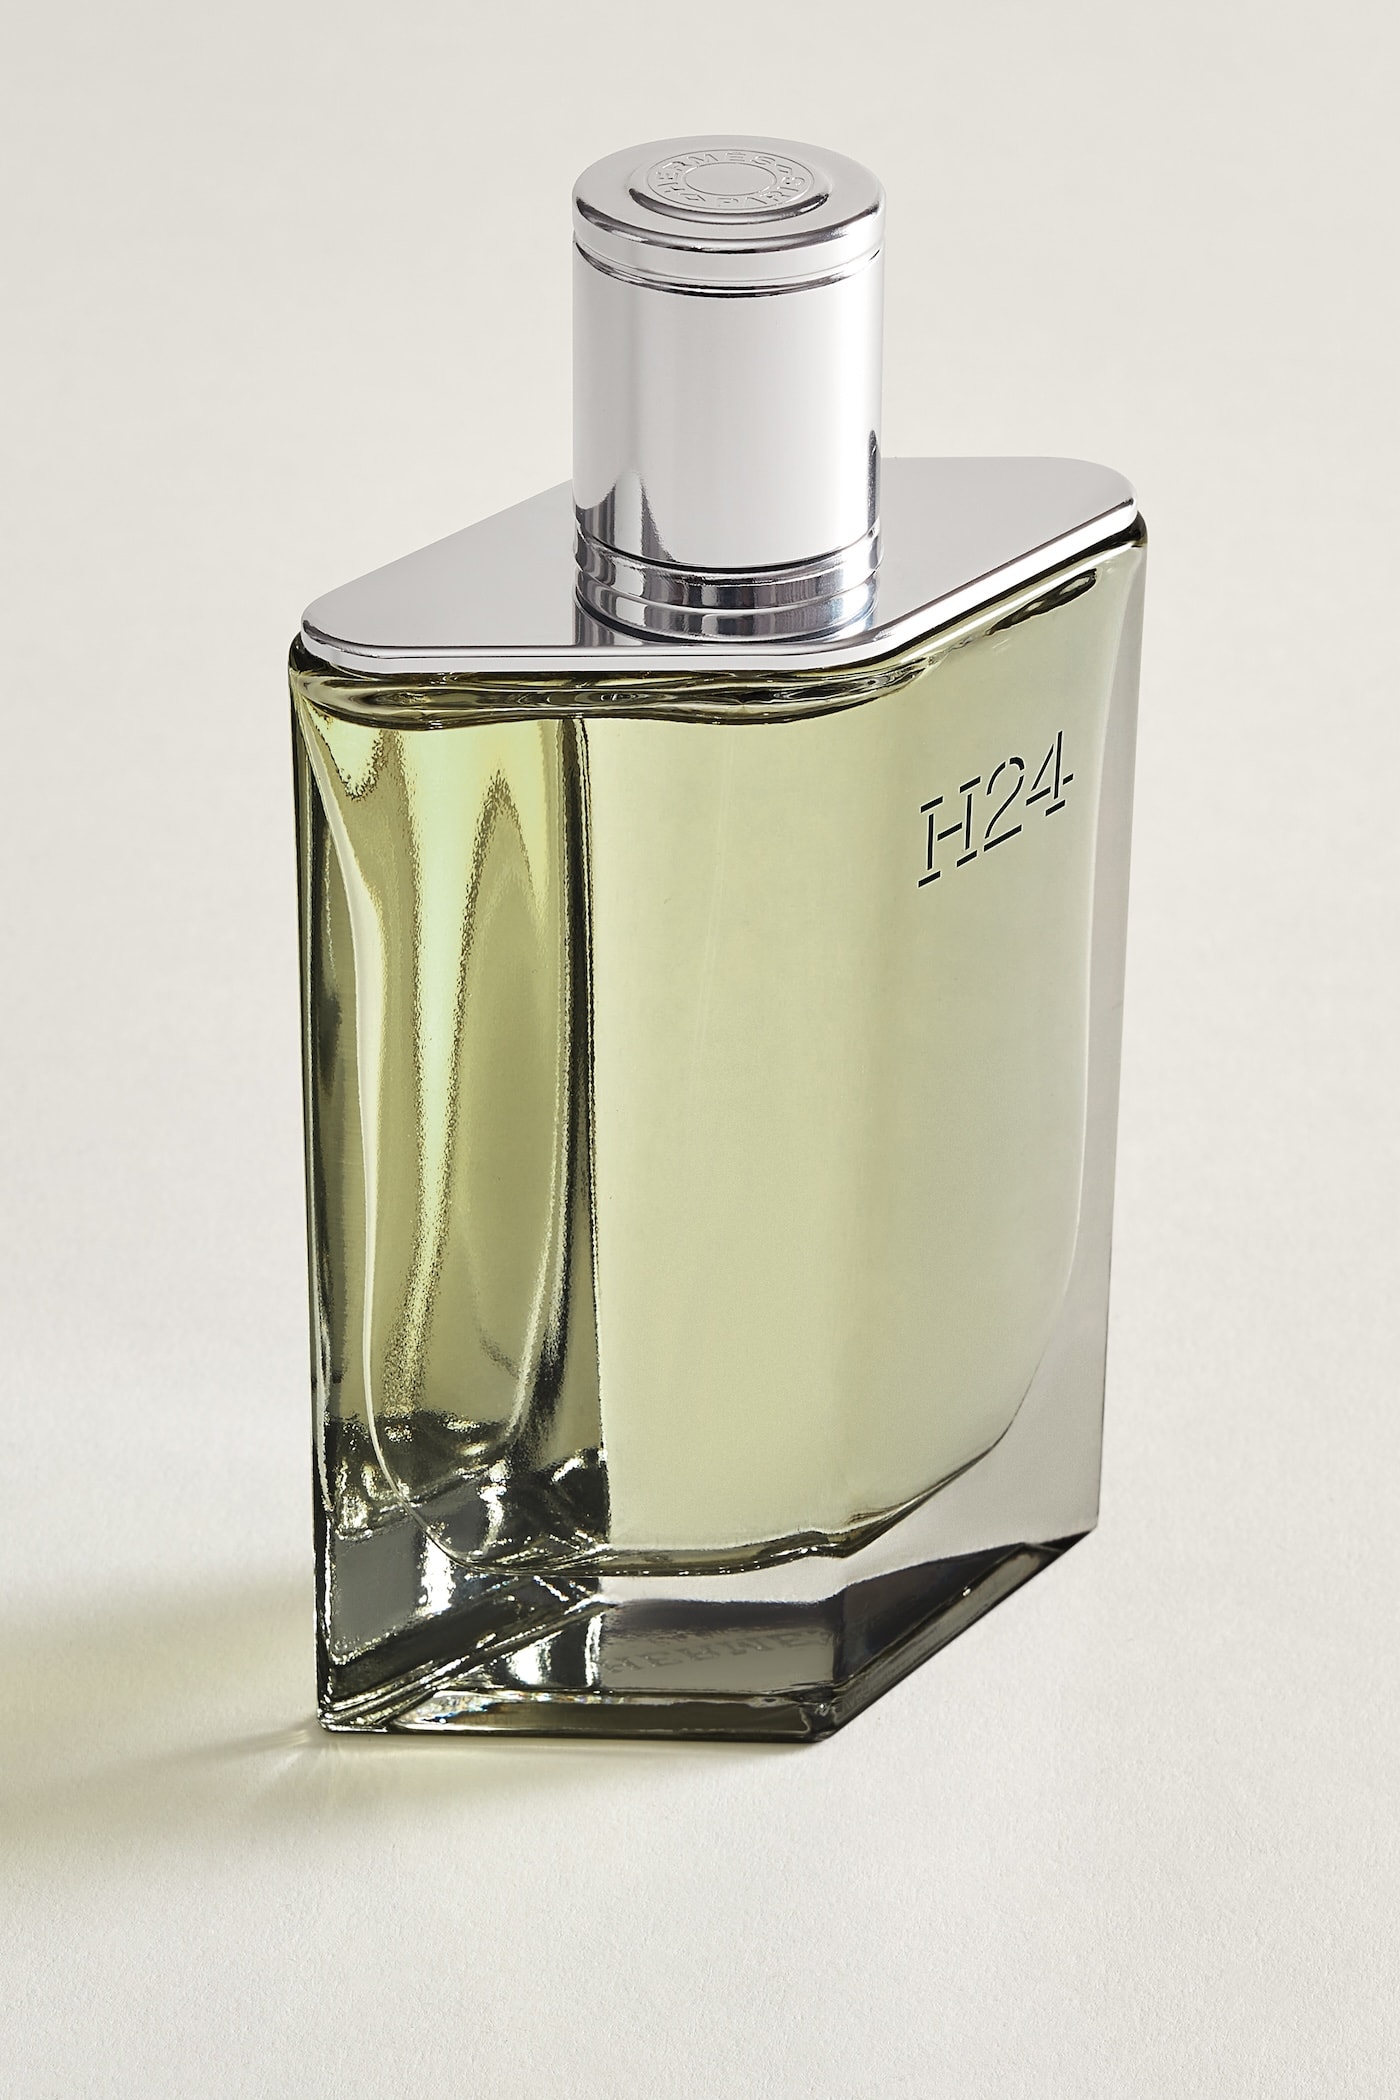 Hermès 推出全新 H24 淡香精香氛系列